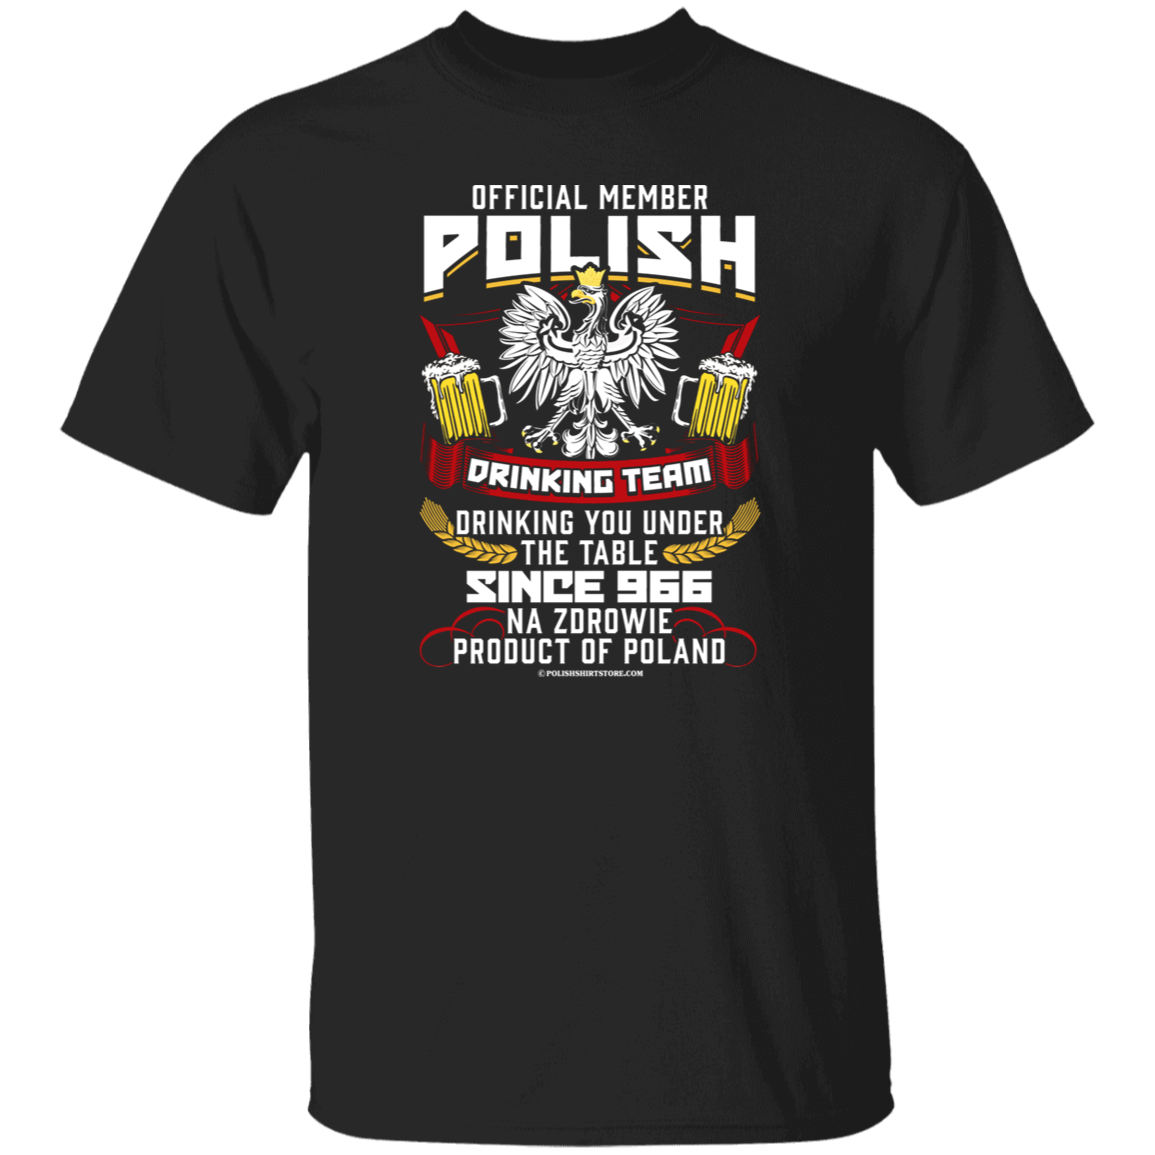 Polish Drinking Team Drinking You Under The Table Since 966 Apparel CustomCat G500 5.3 oz. T-Shirt Black S